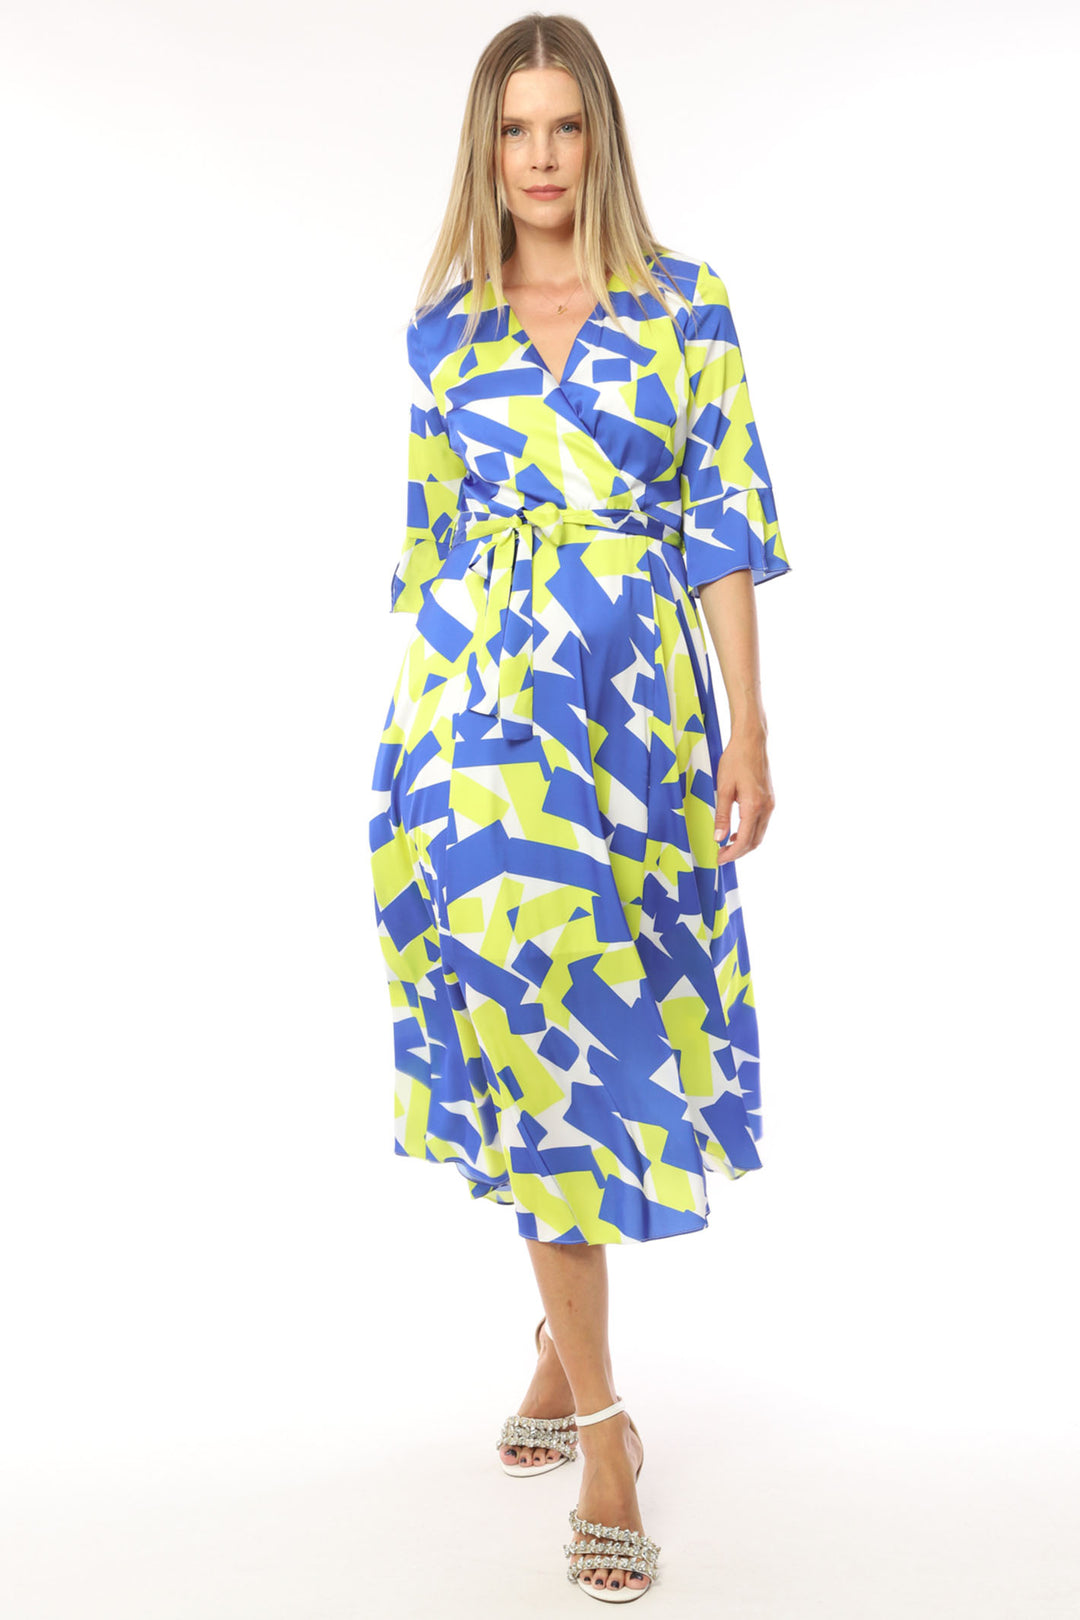 Ella Boo 2299-10 Royal Blue Lime Print Wrap Style Midi Occasion Dress - Rouge Boutique Inverness